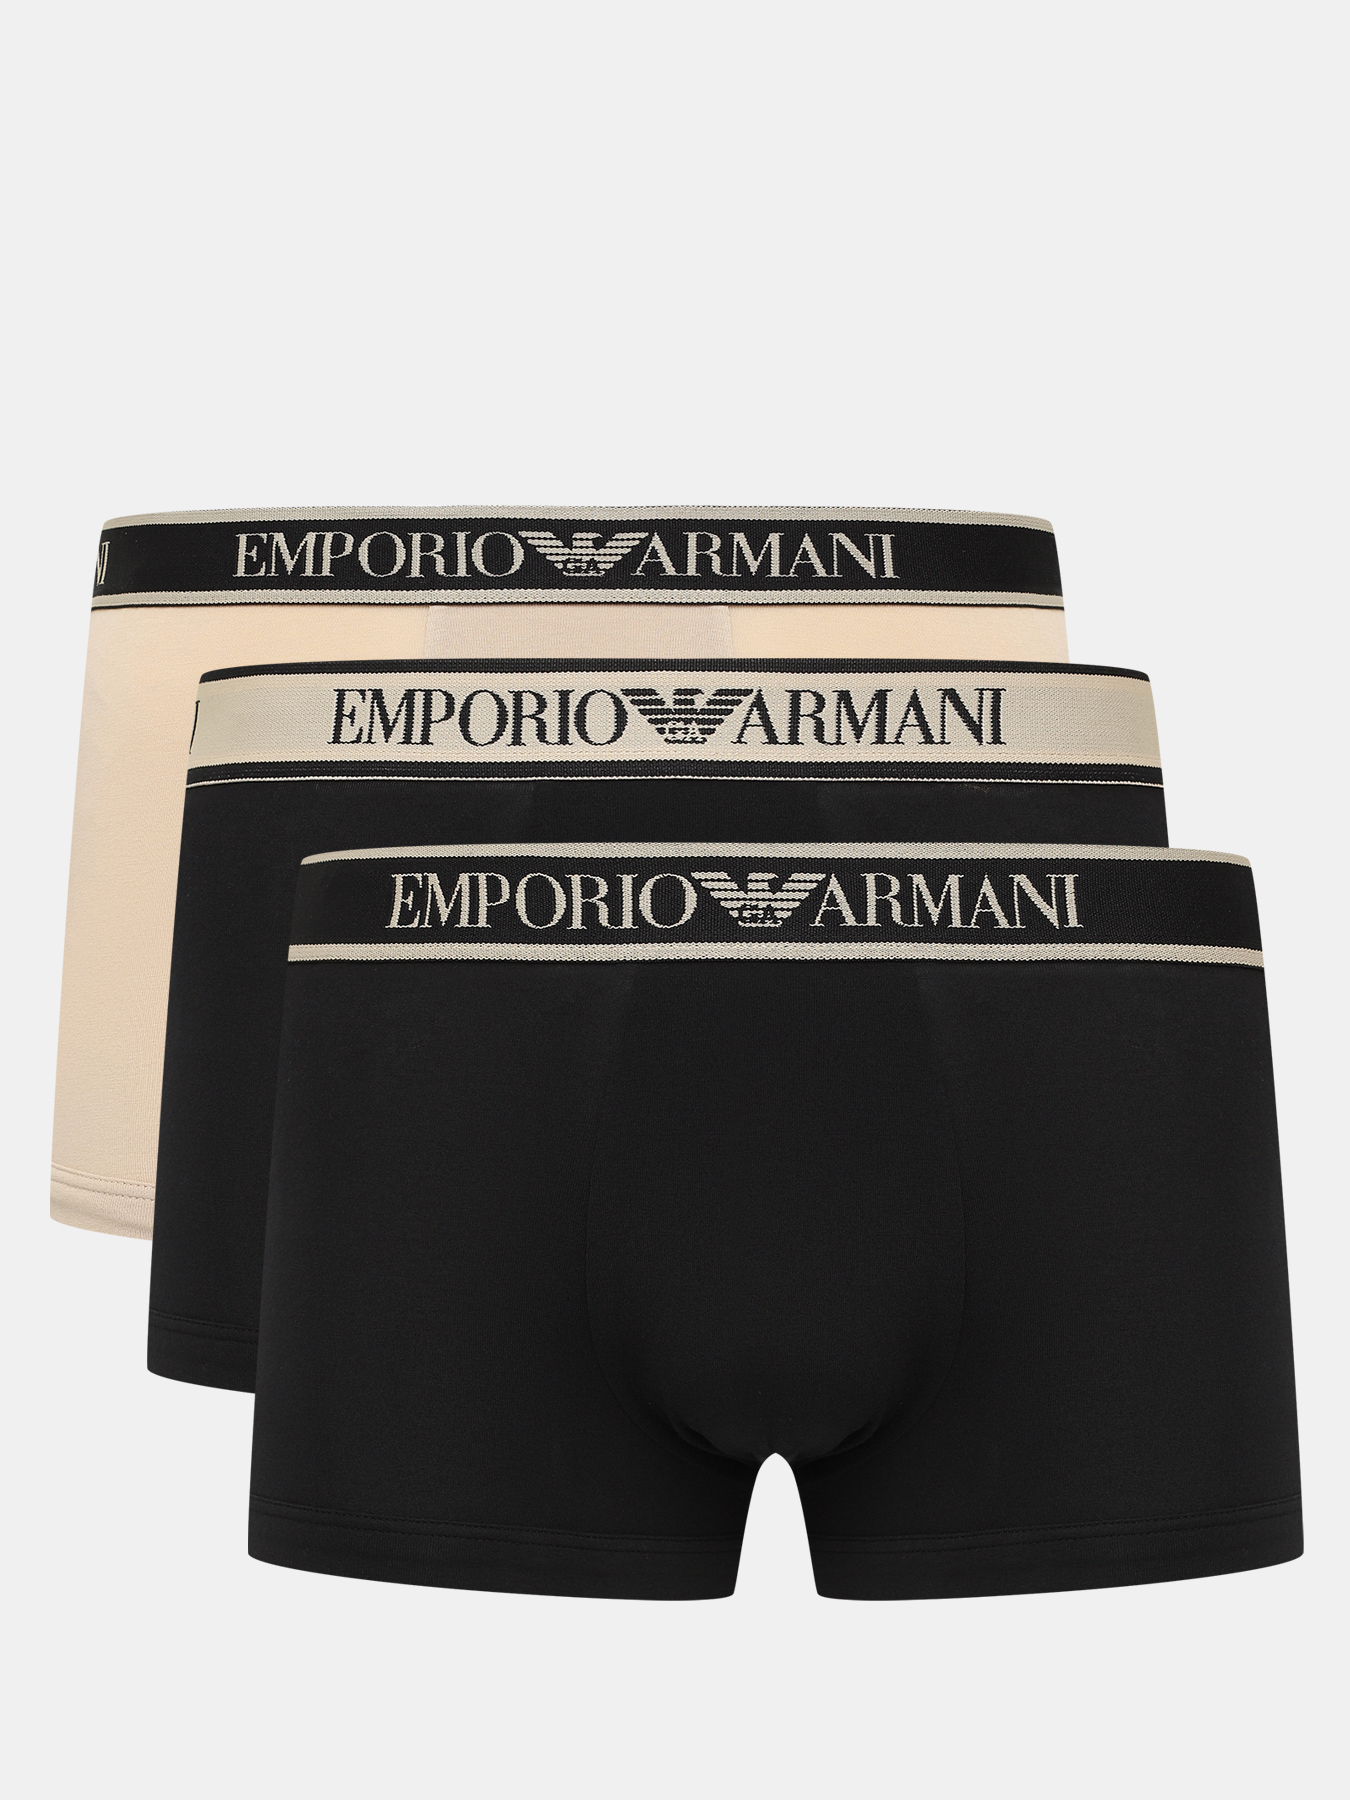 Боксеры (3 шт) Emporio Armani 438109-043, цвет мультиколор, размер 48